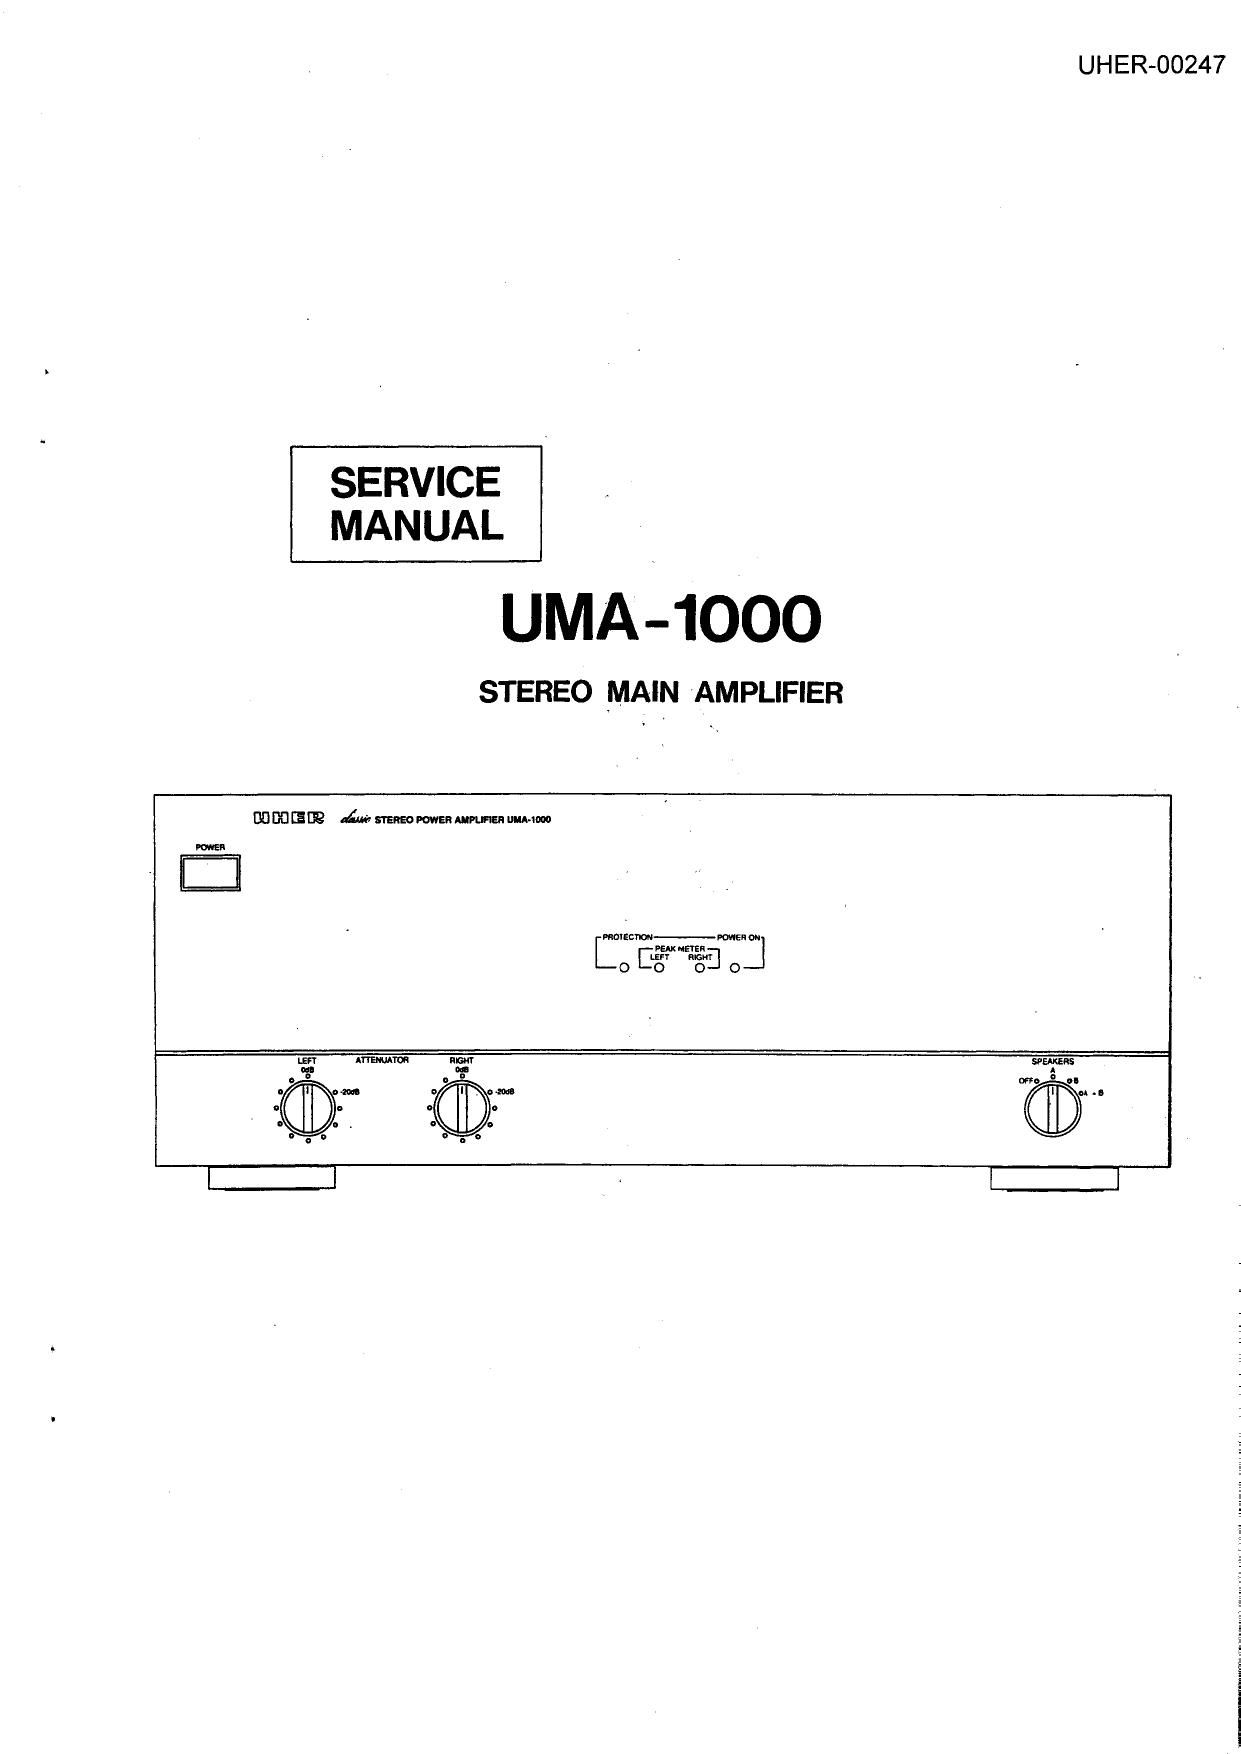 Uher UMA 1000 Service Manual